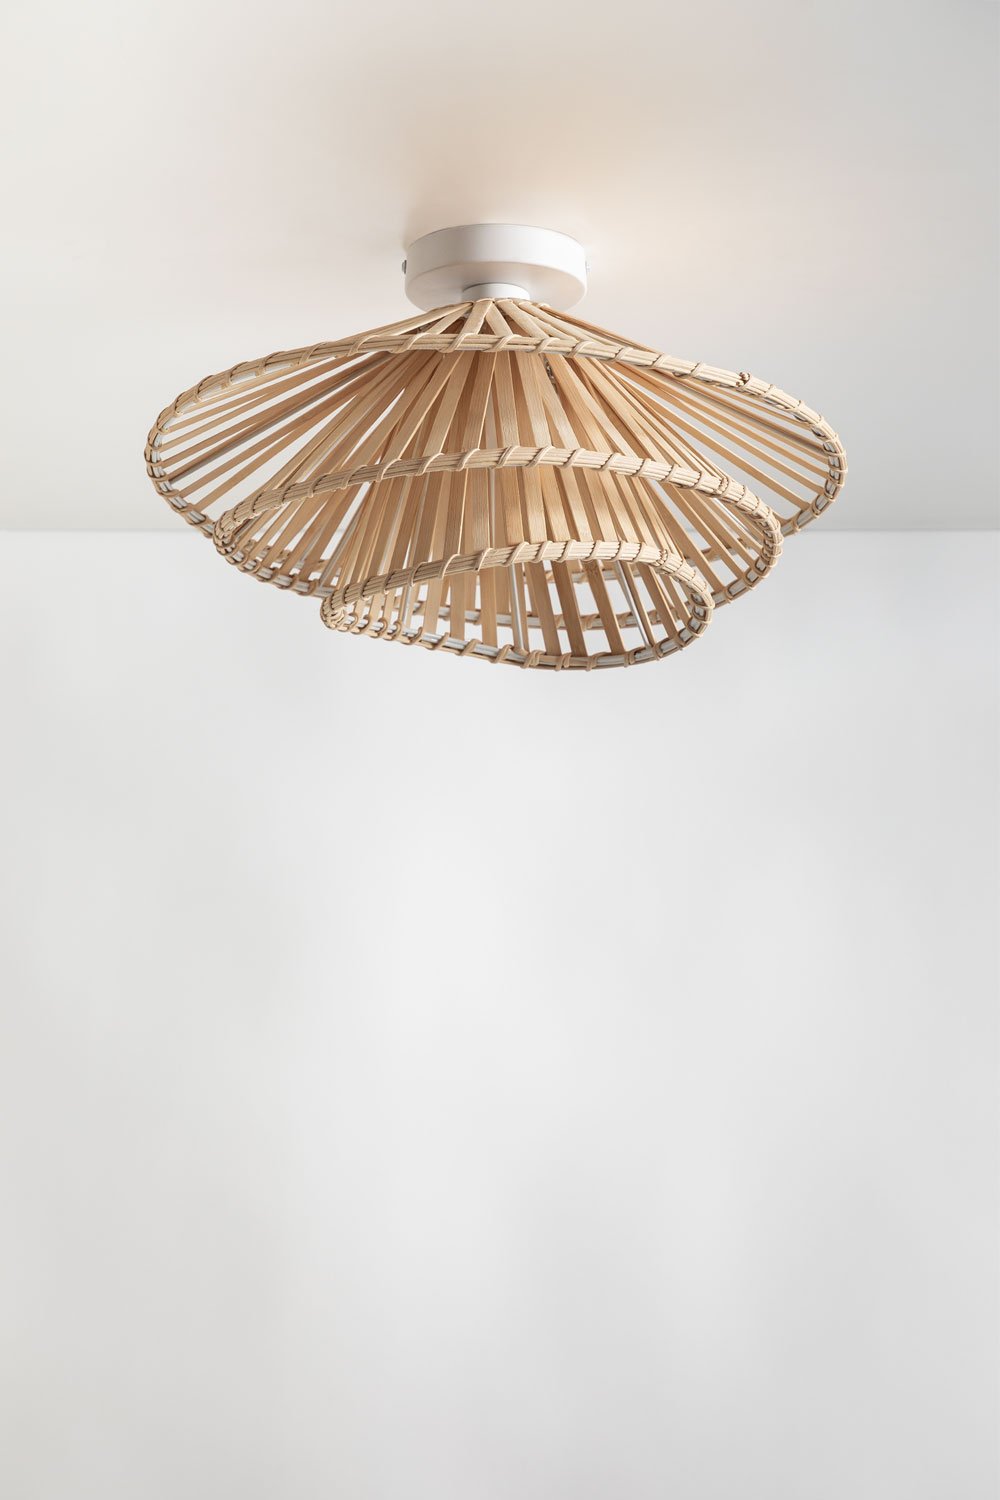 Taroucas Bamboe Plafondlamp, galerij beeld 1